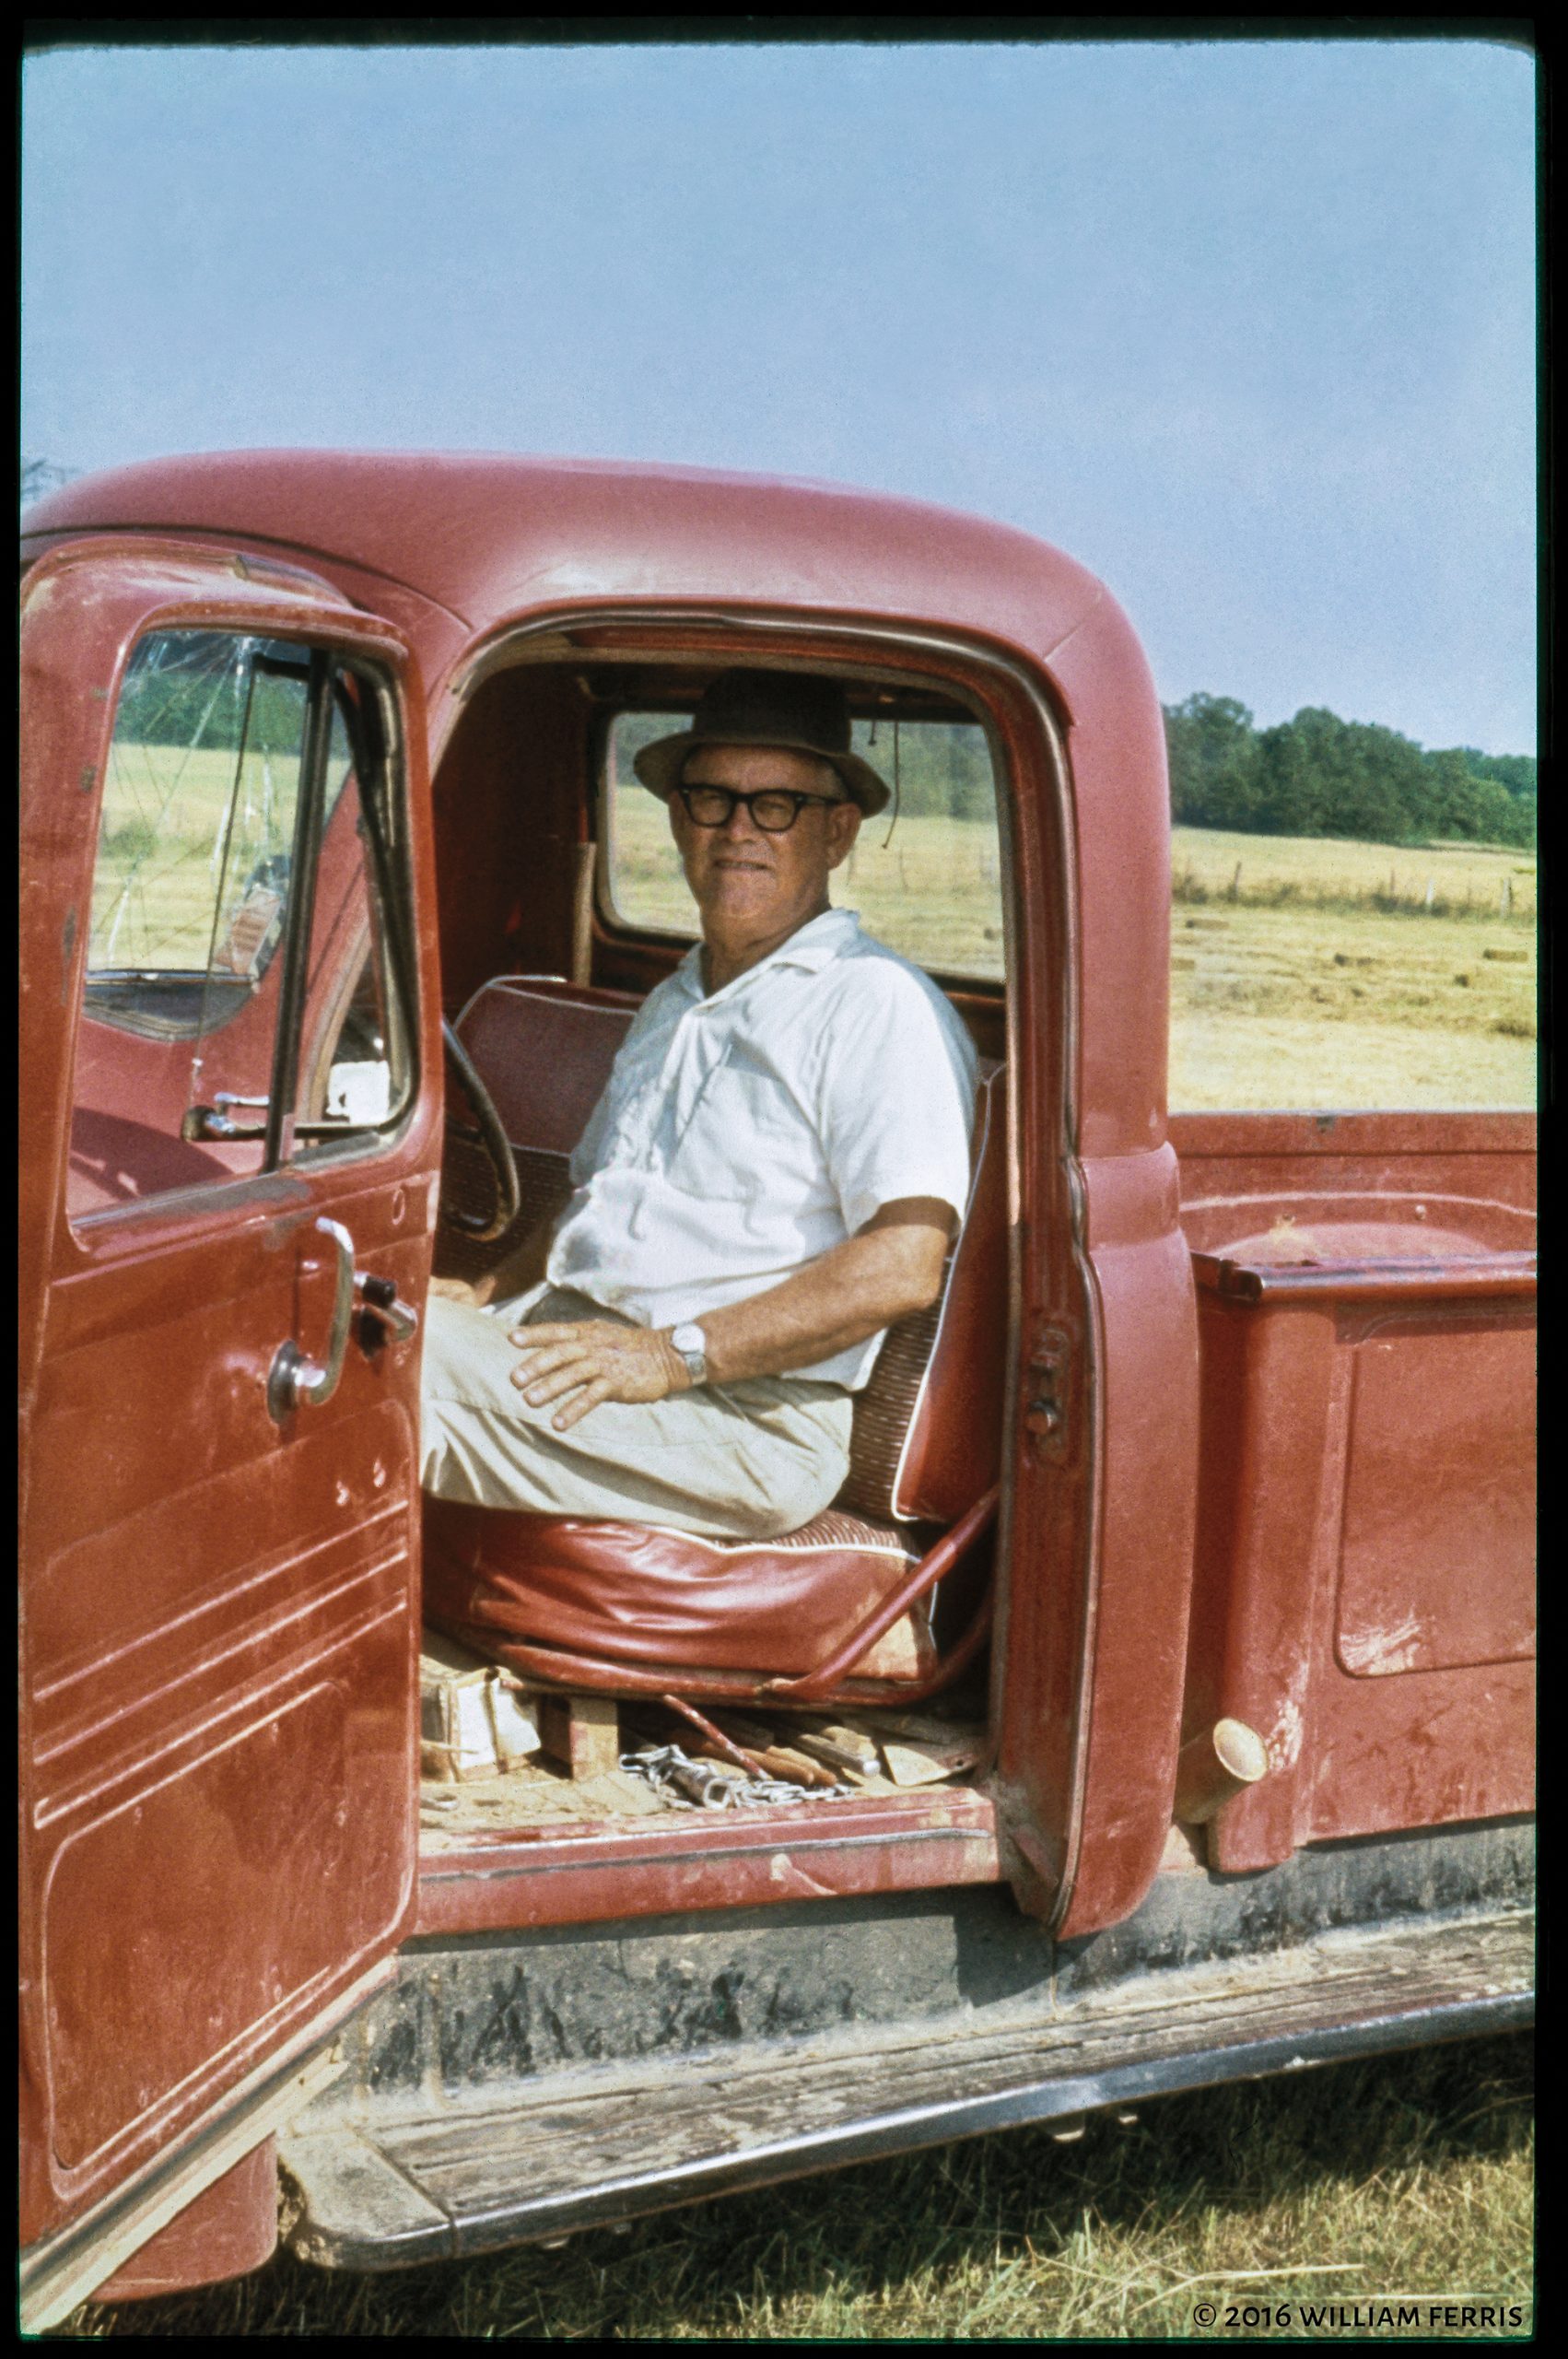 William Ferris S. sits in a red truck